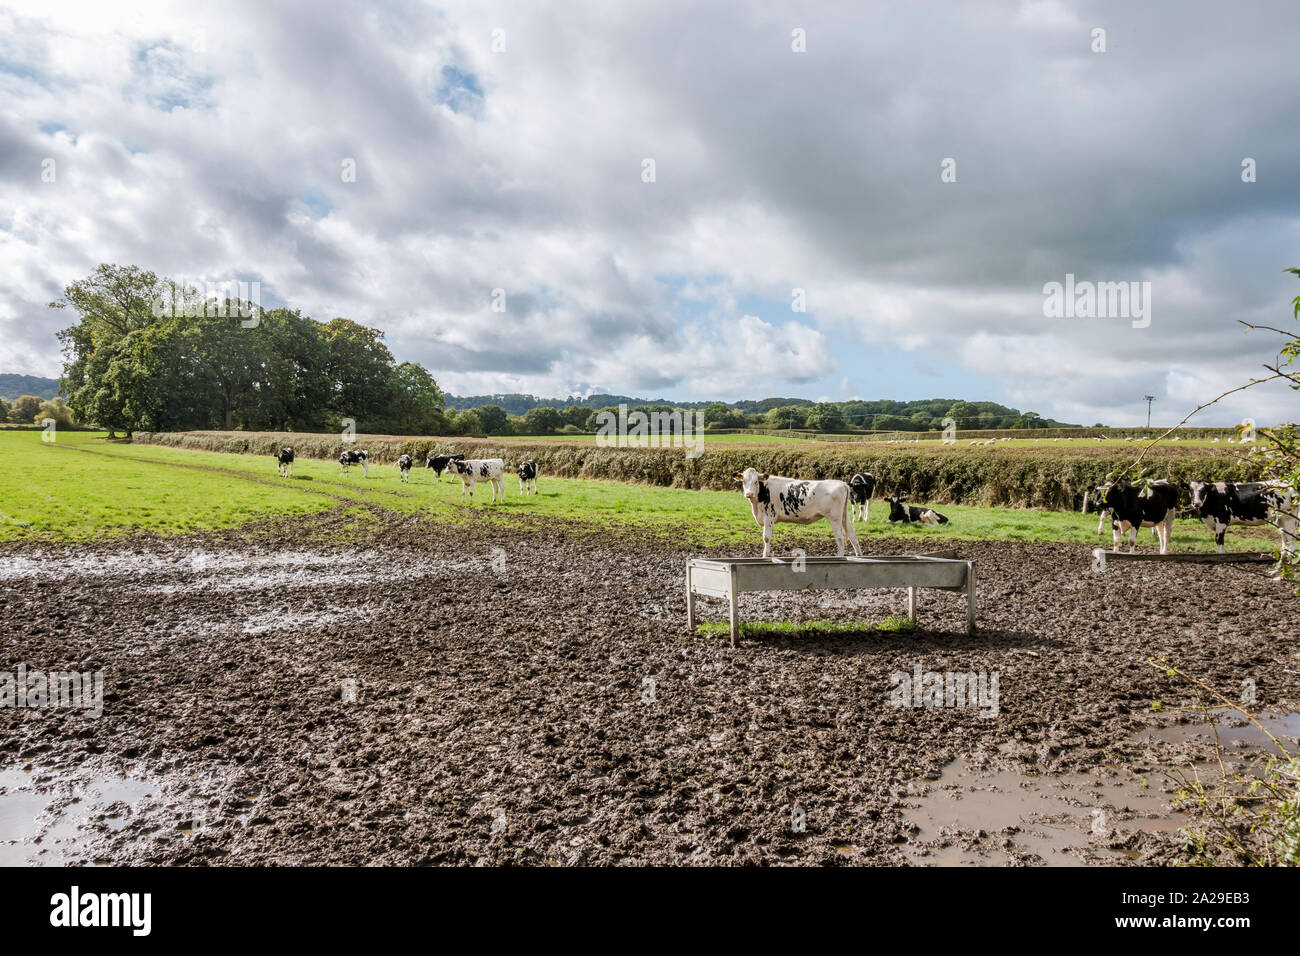 Cows standing in muddy field, Dorset countryside near Semley, Shaftesbury, UK, Europe. Stock Photo